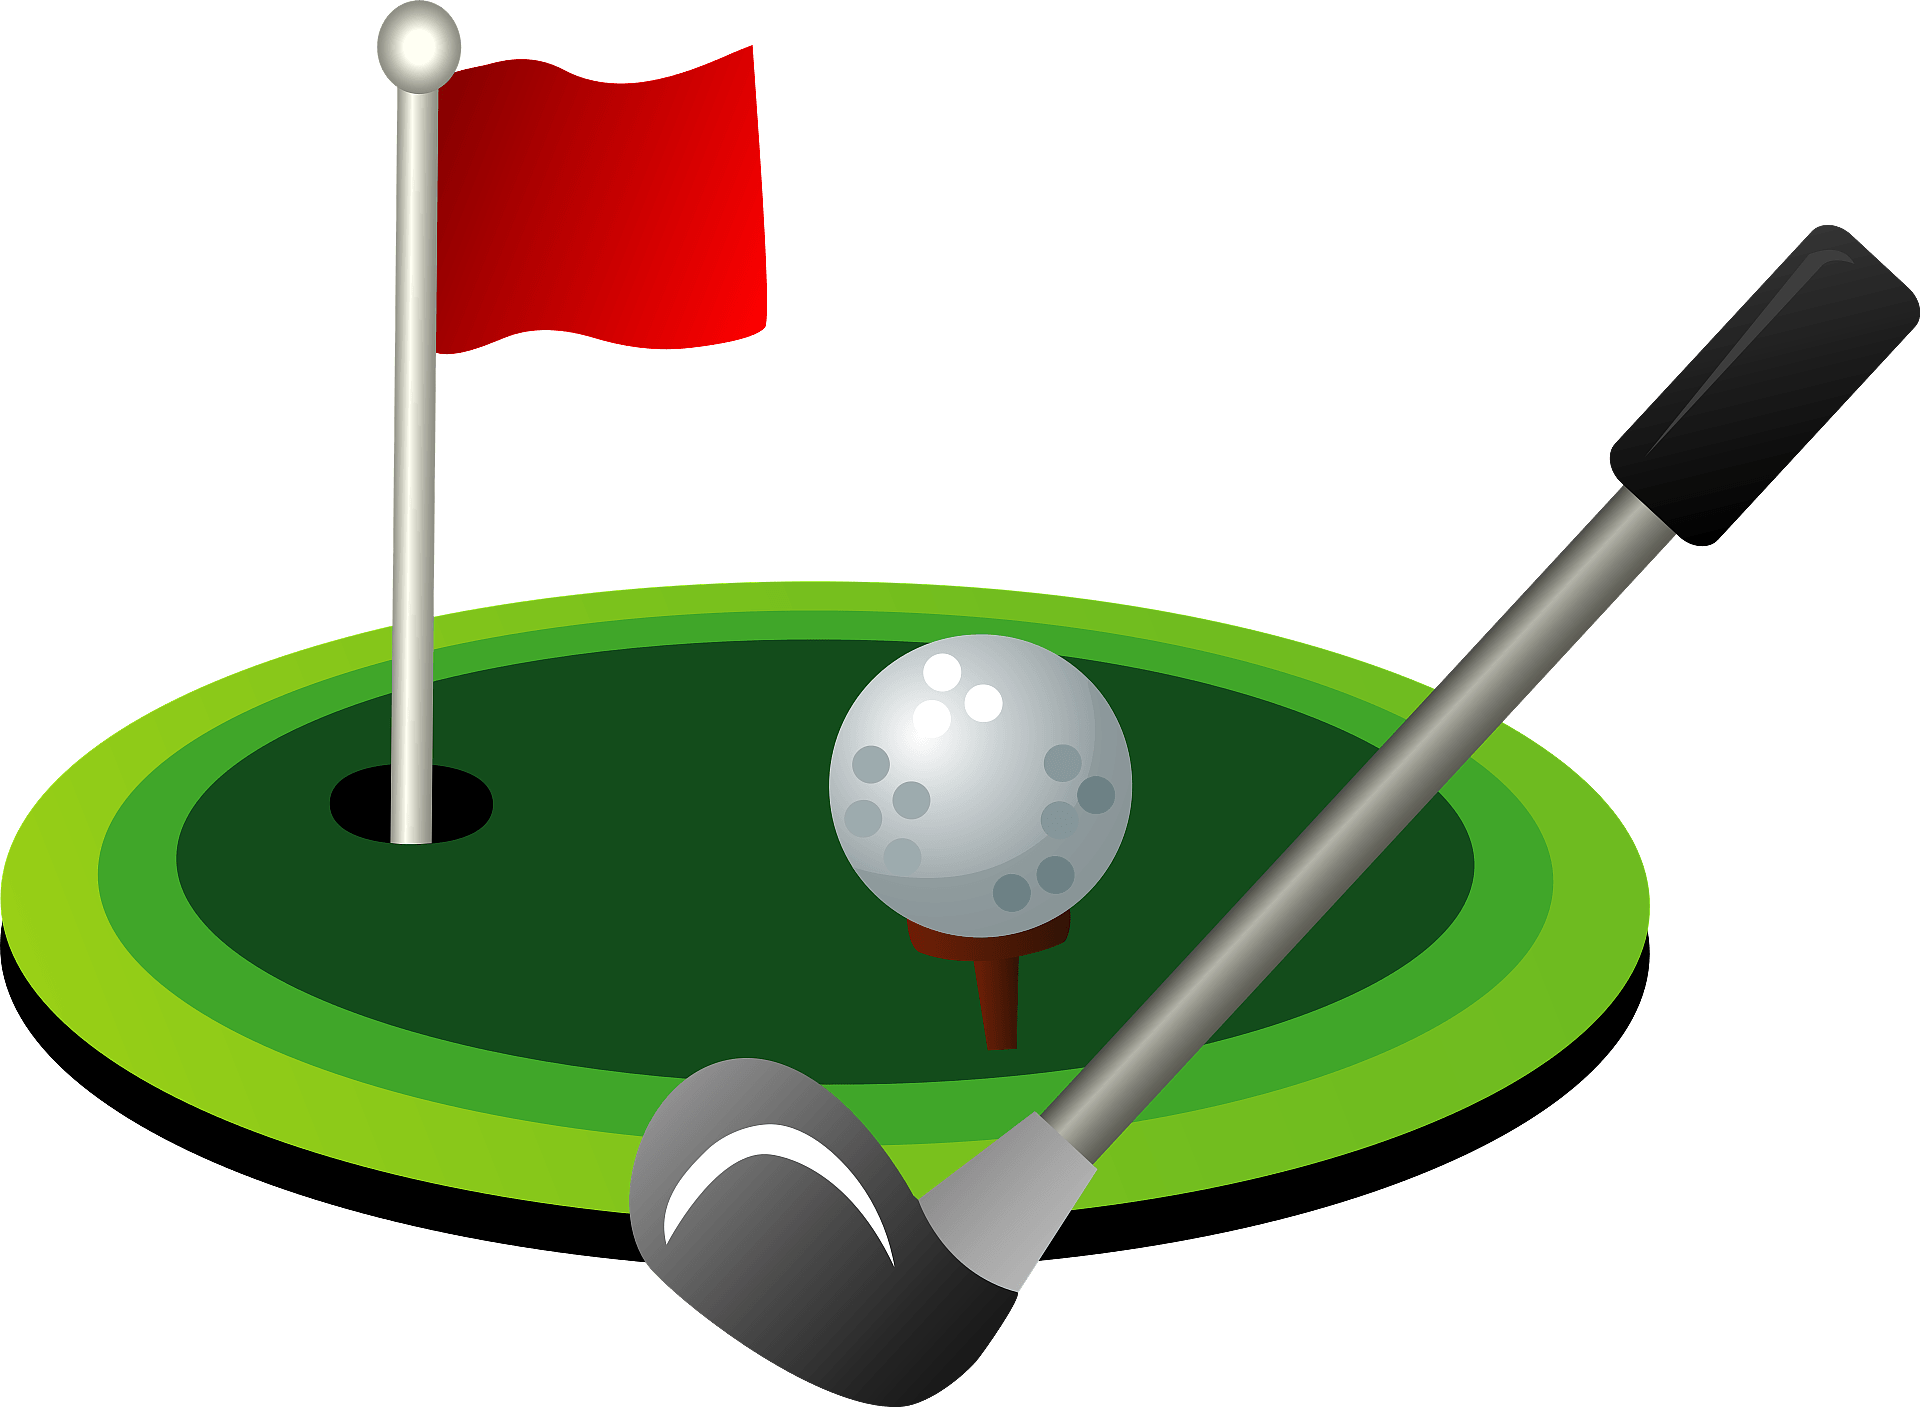 Golf Course Clipart Images – Browse 2,577 Stock Photos, Vectors - Clip ...